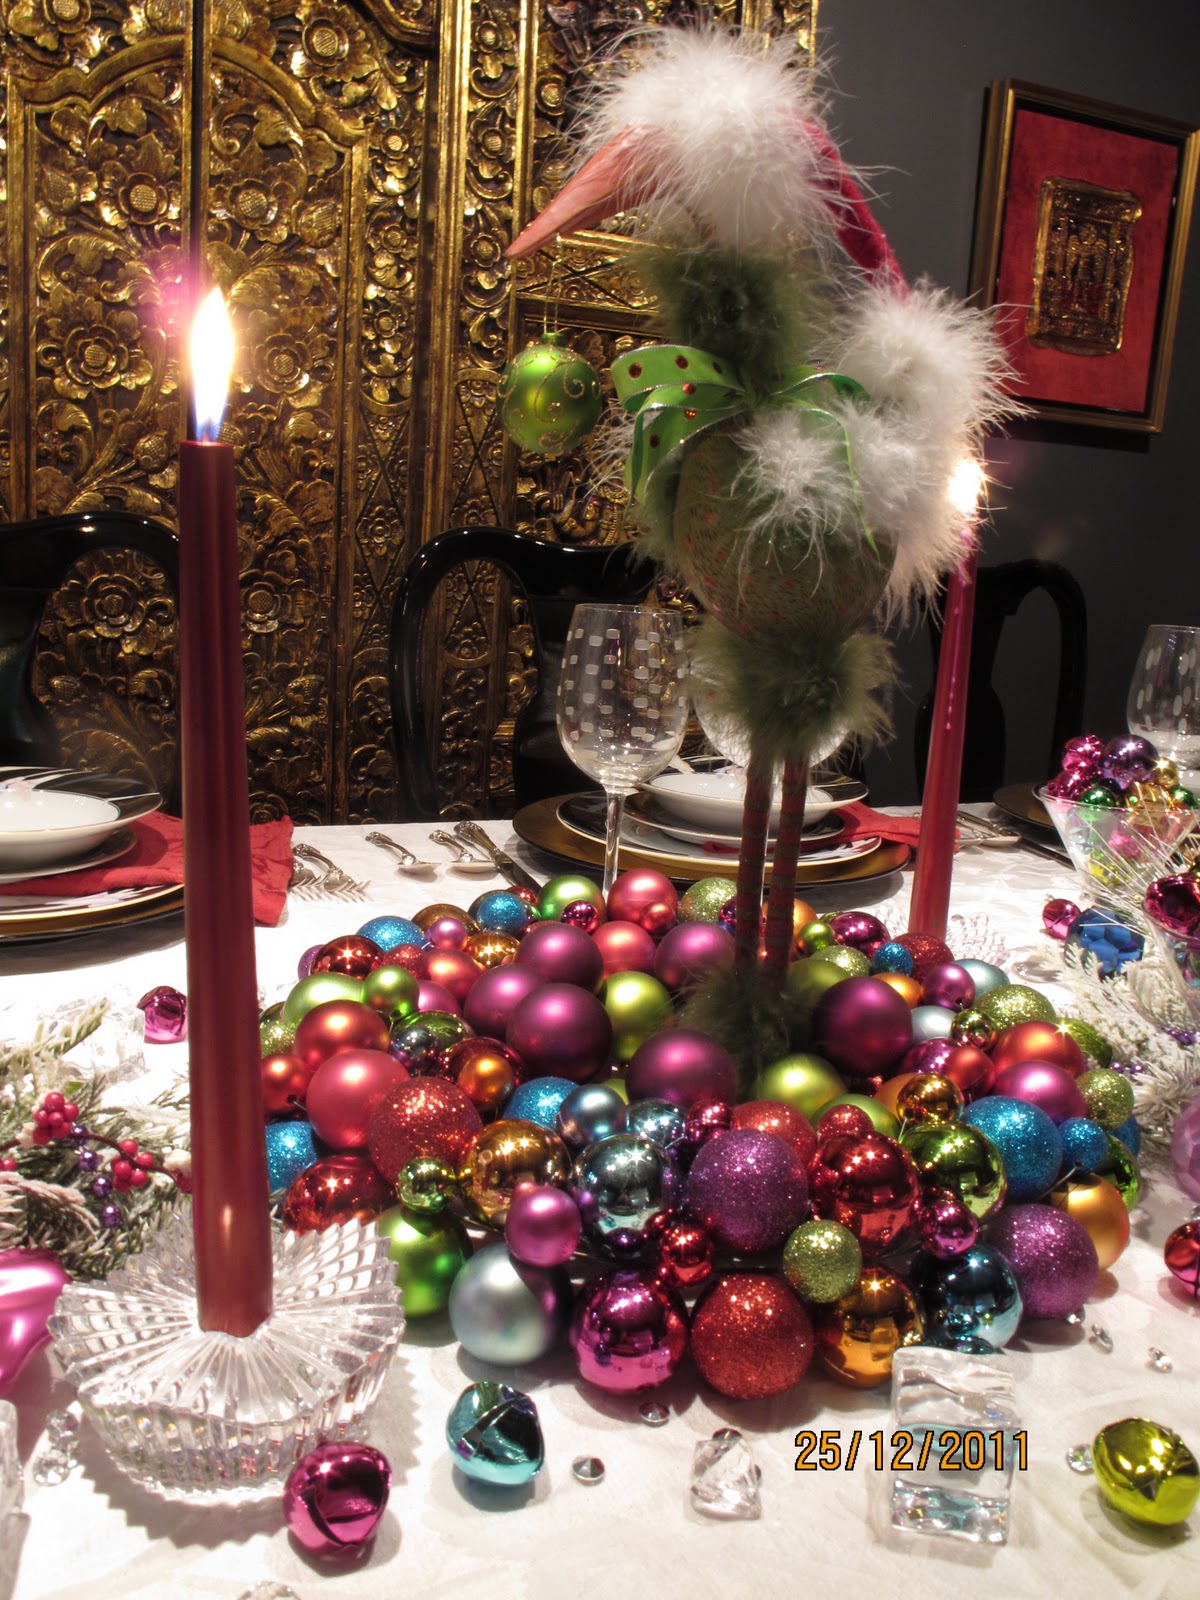 Christmas Village Fun Blog: Decorating the Christmas Table--with 